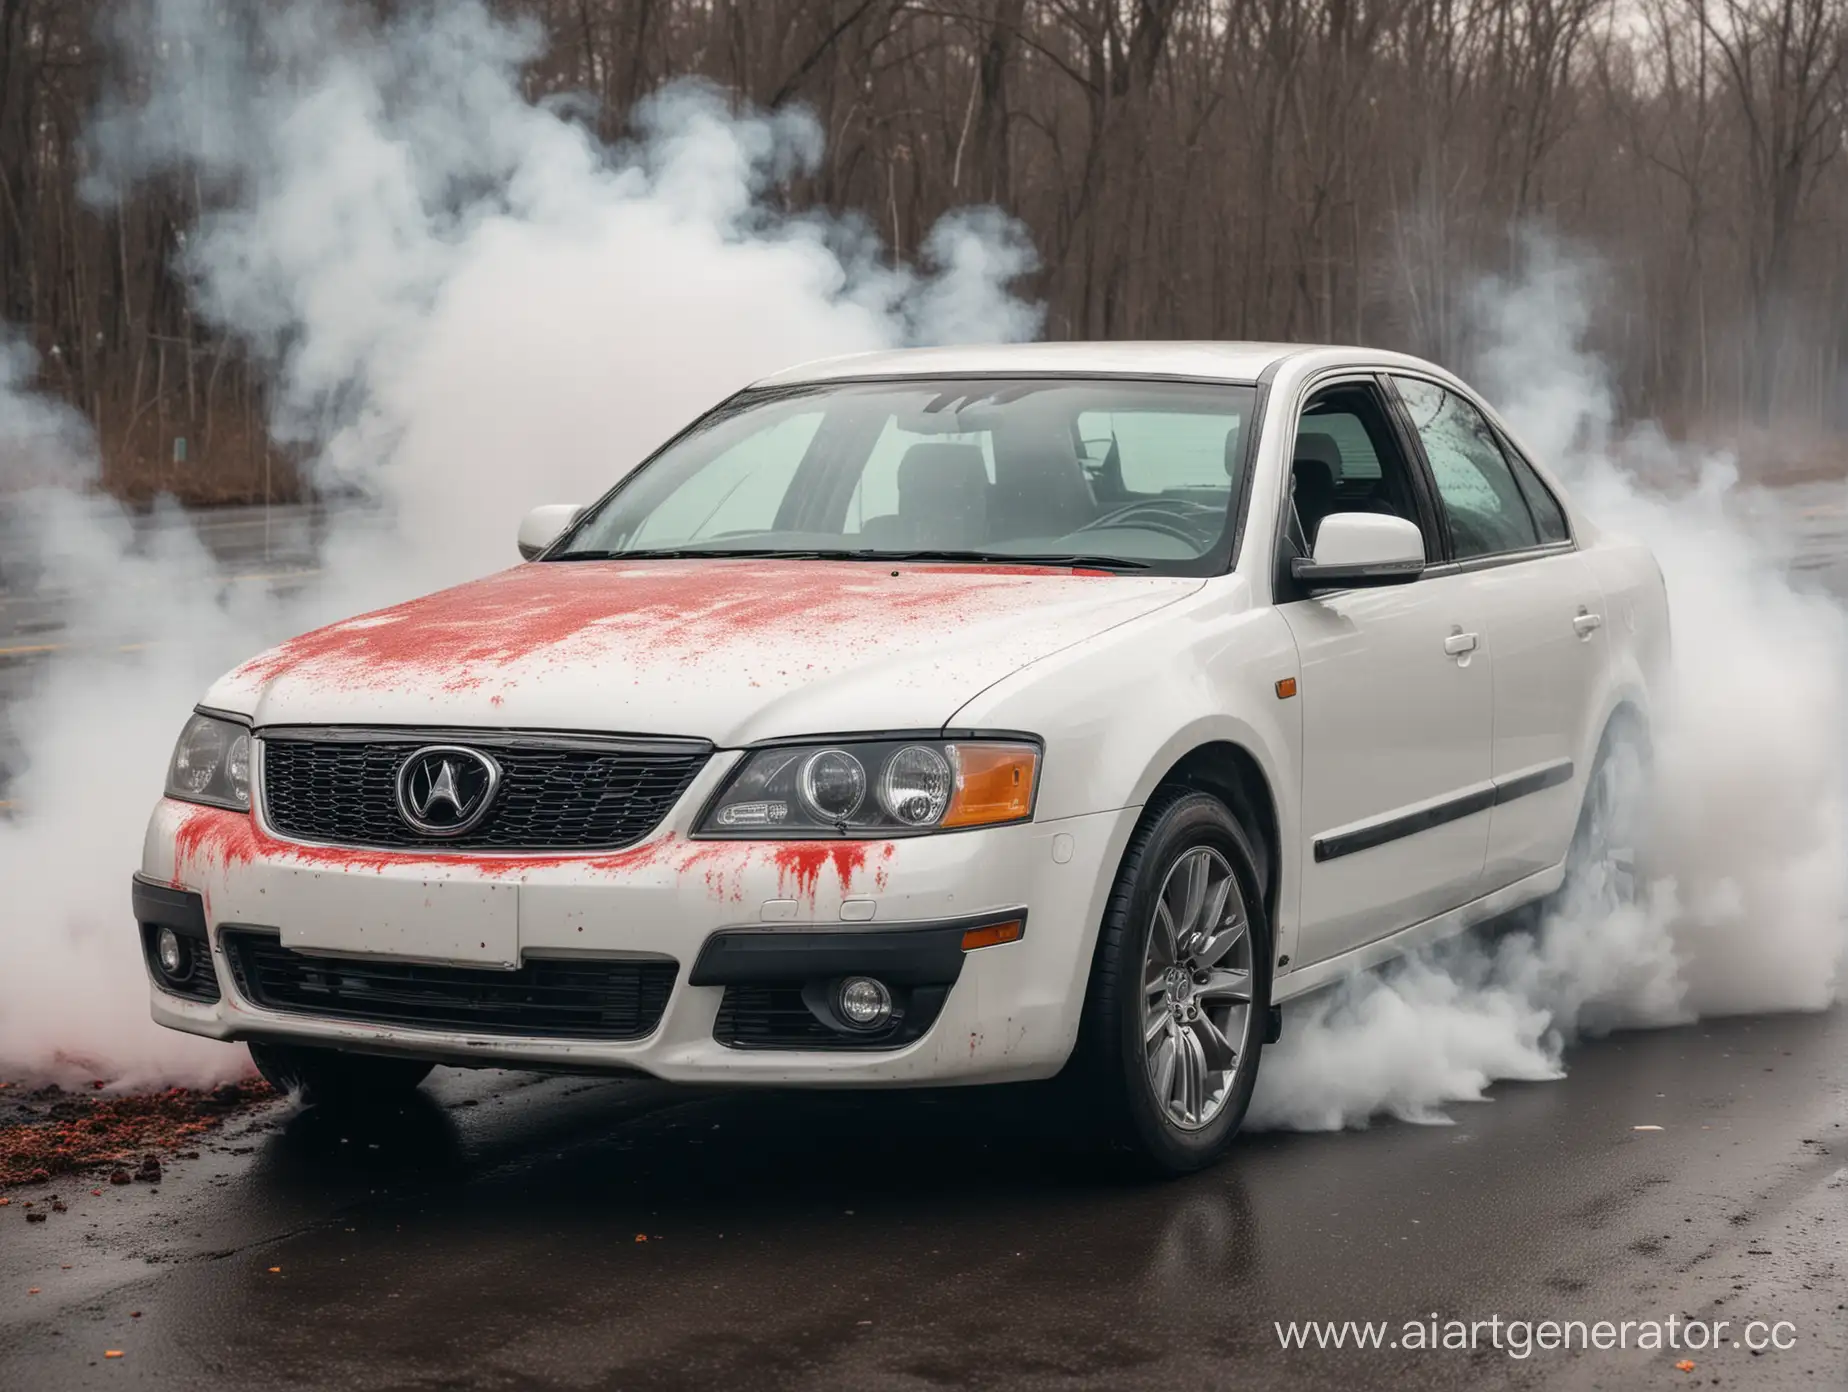 White-Sedan-with-Leaking-Antifreeze-and-Smoke